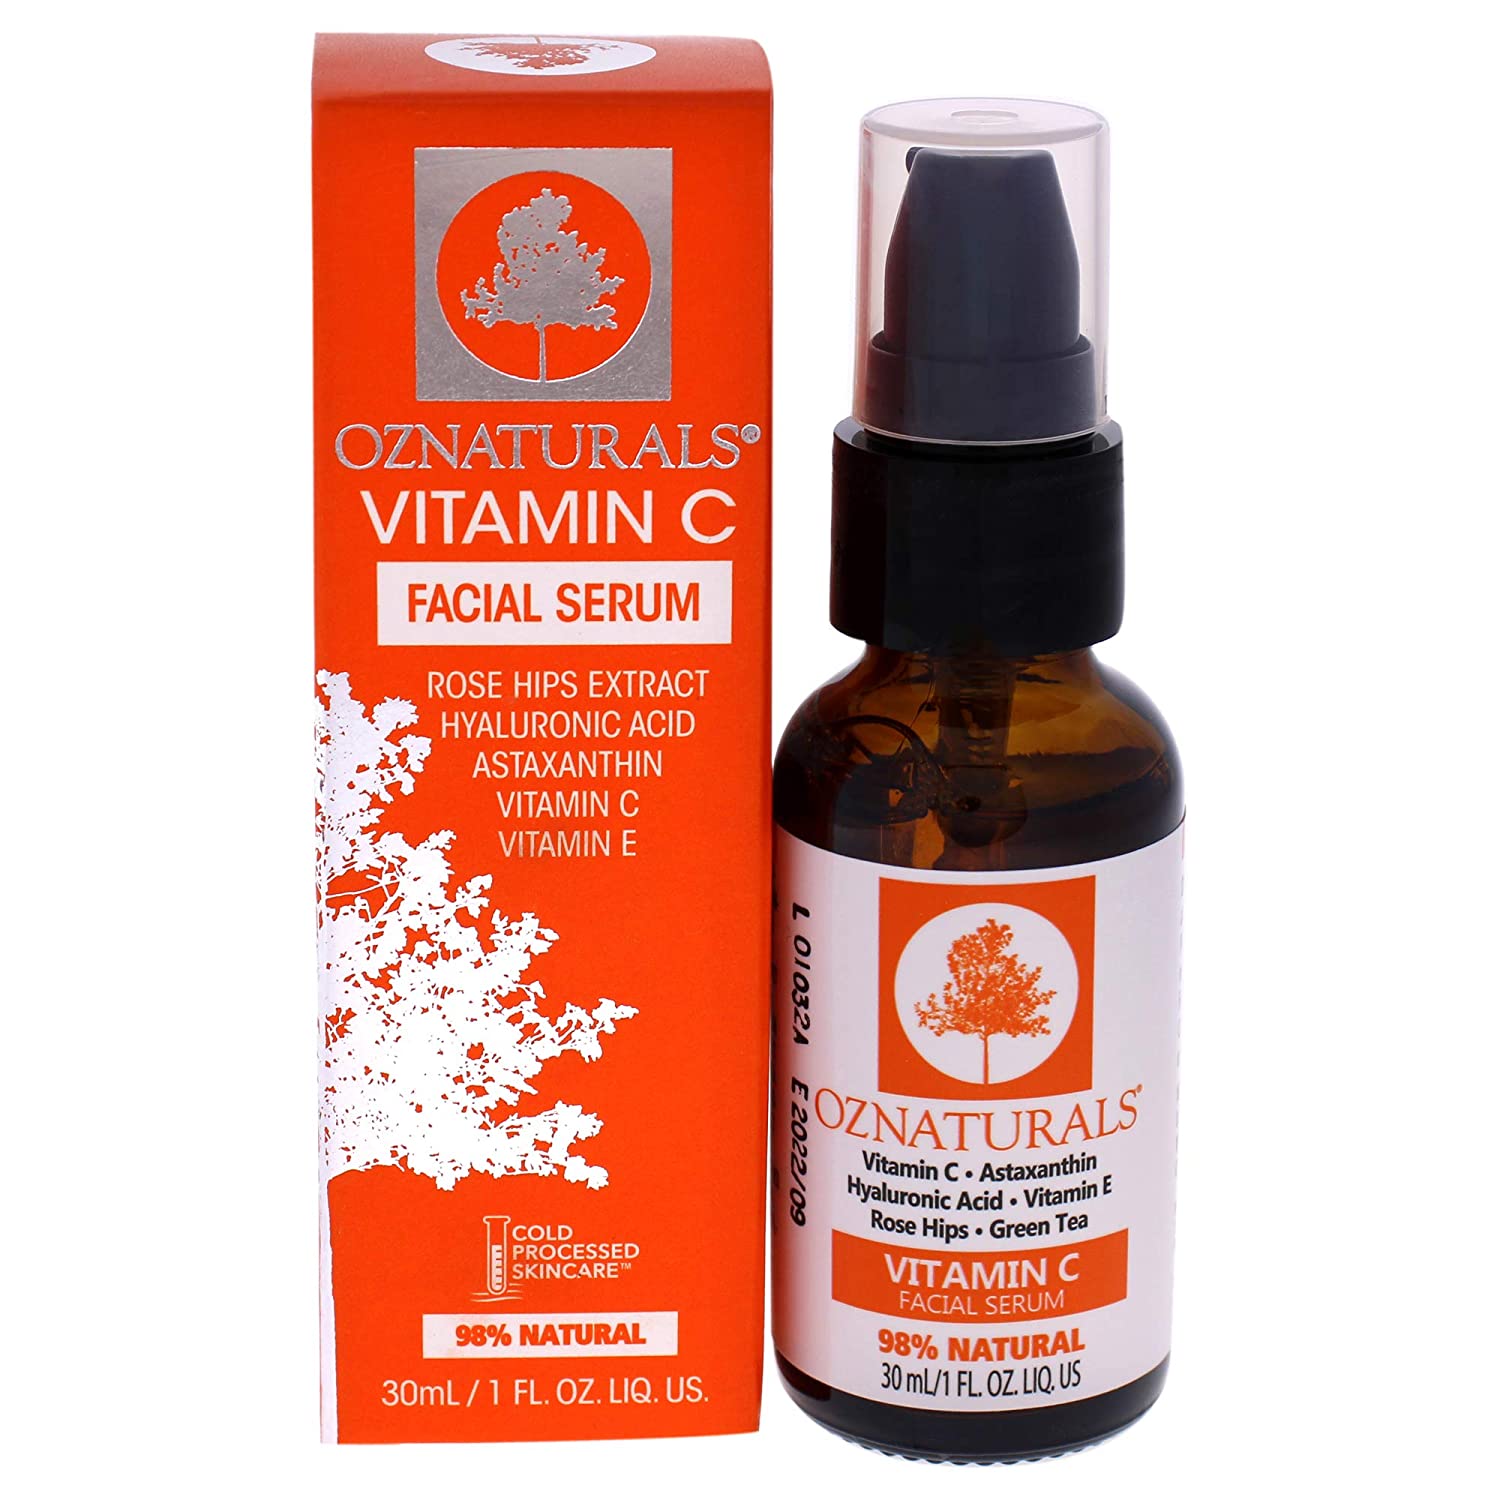  Oznaturals vitamin c serum để tối ưu hiệu quả chăm sóc da?